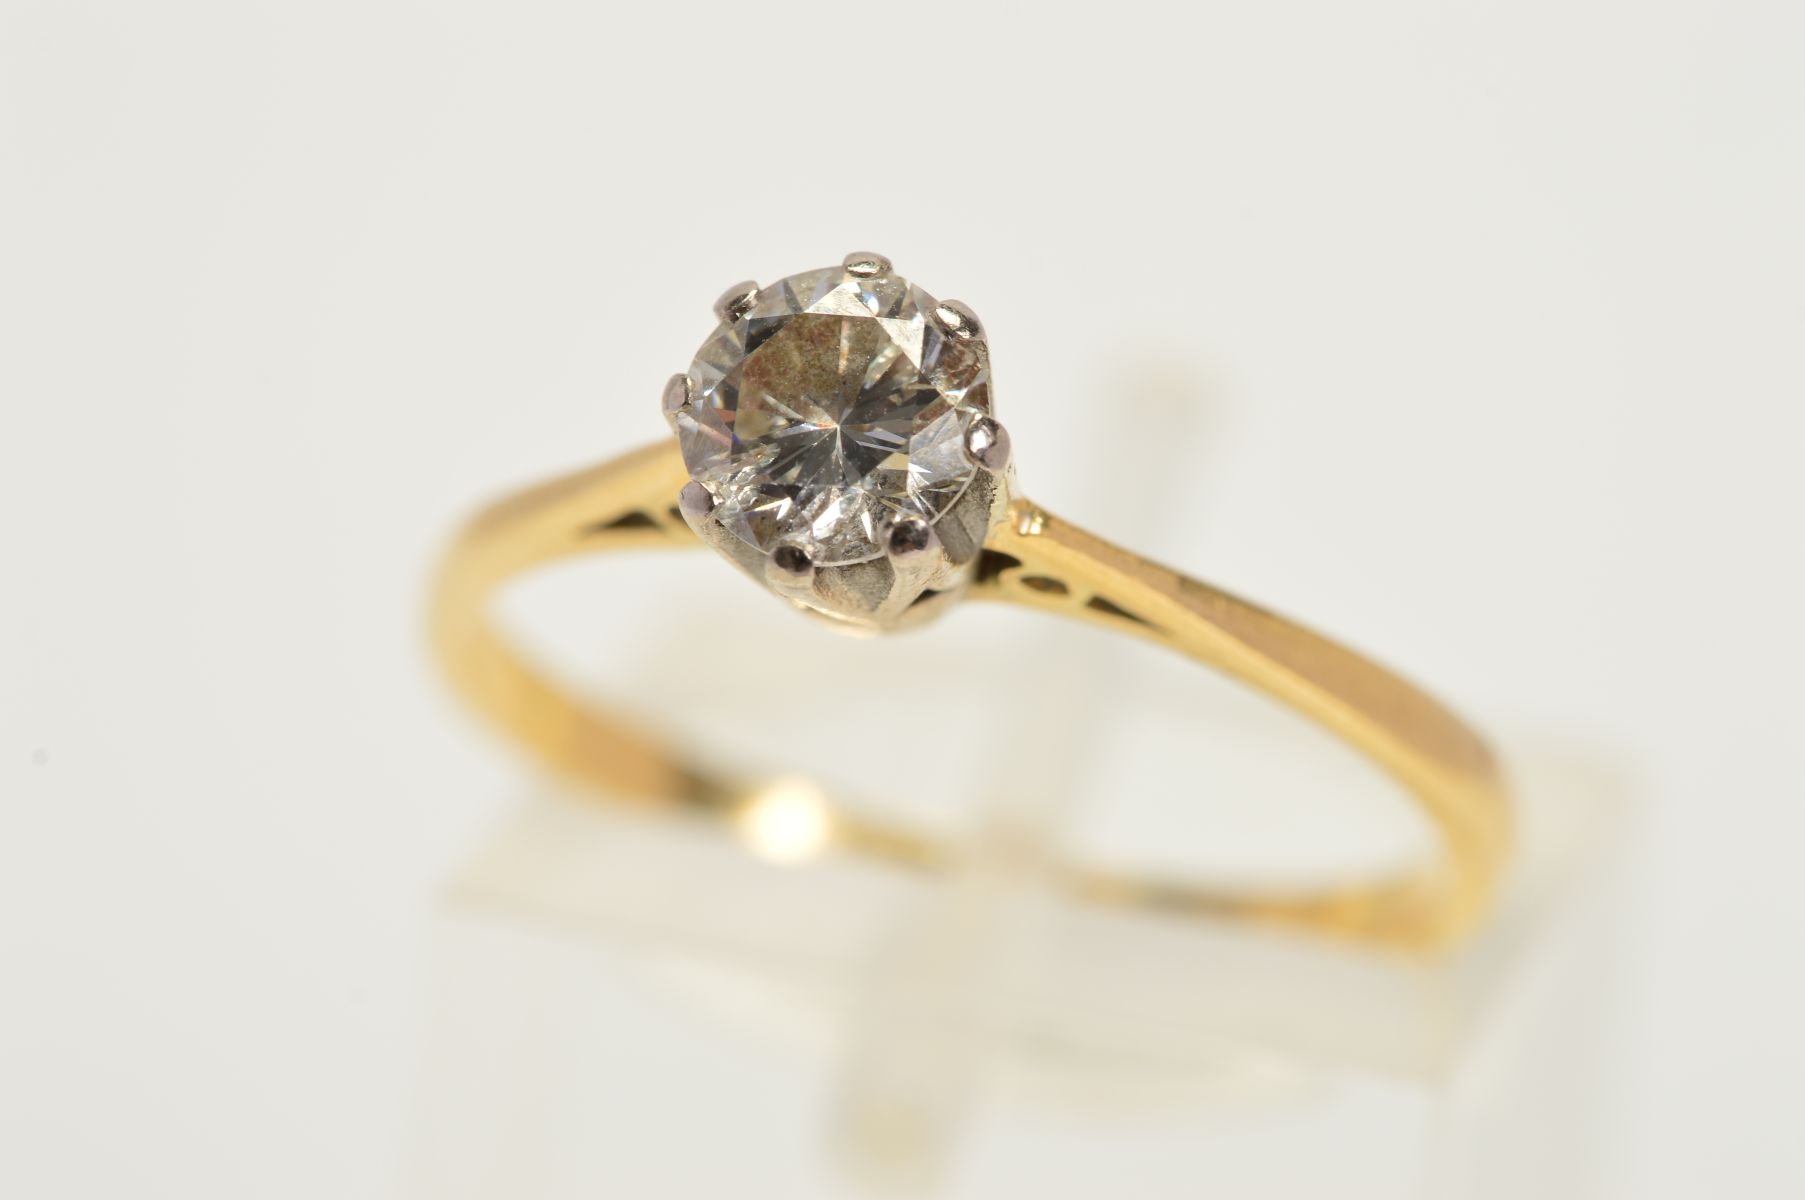 A DIAMOND SINGLE STONE RING, estimated modern round brilliant cut diamond weight 0.50ct, colour